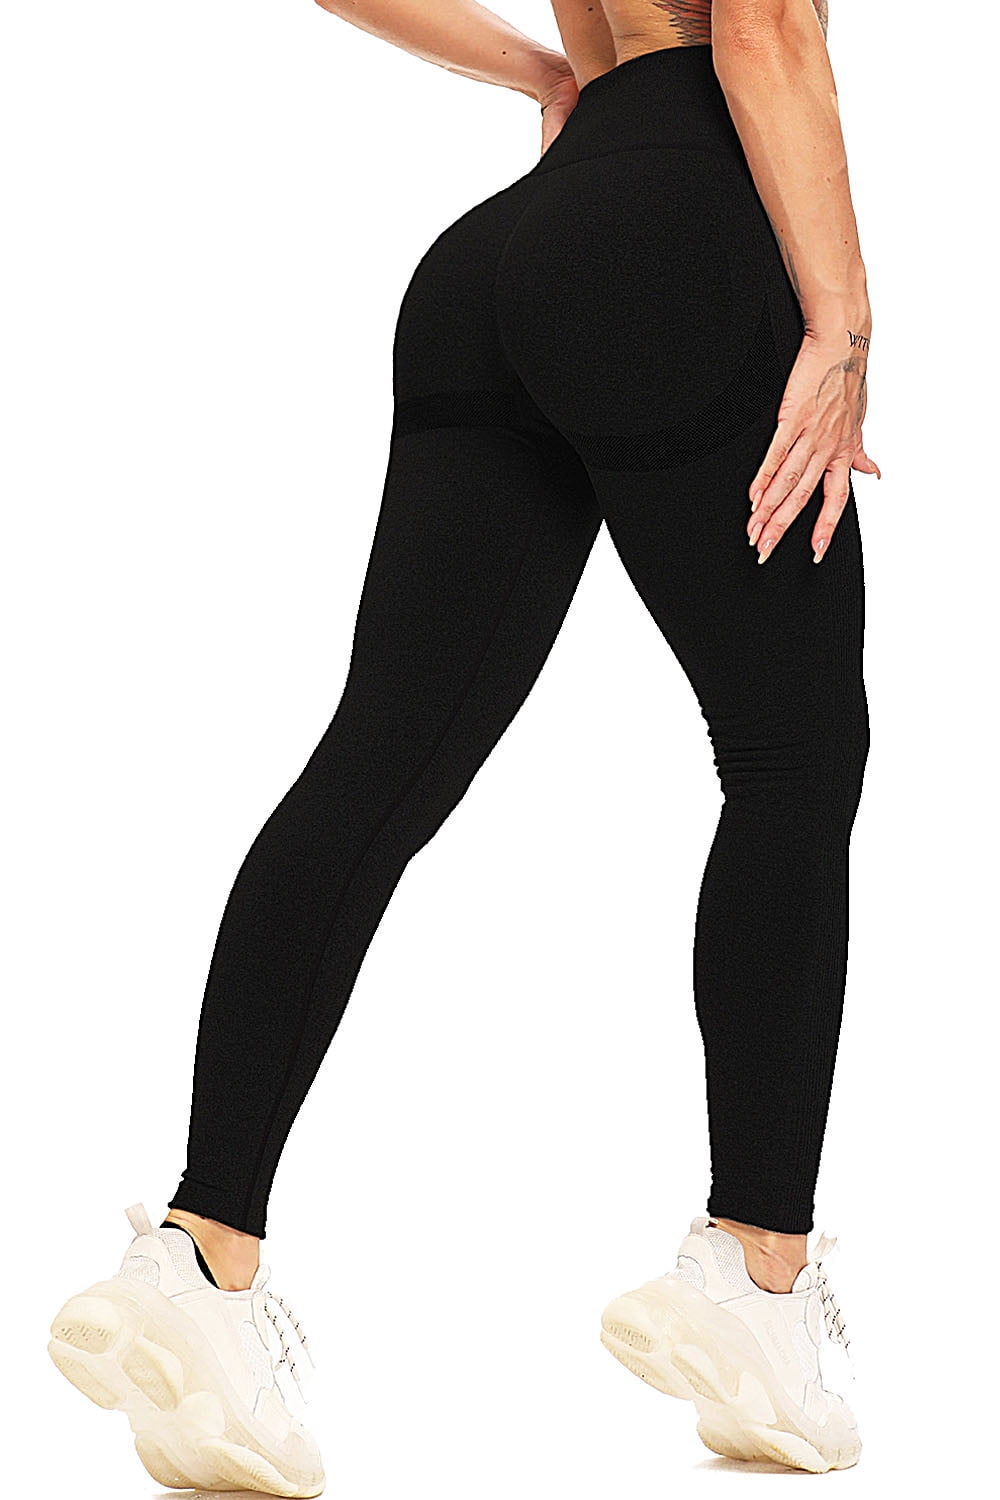 Women Scrunch Pocket Yoga Pants Compression Push Up Leggings Sport High Waist M 